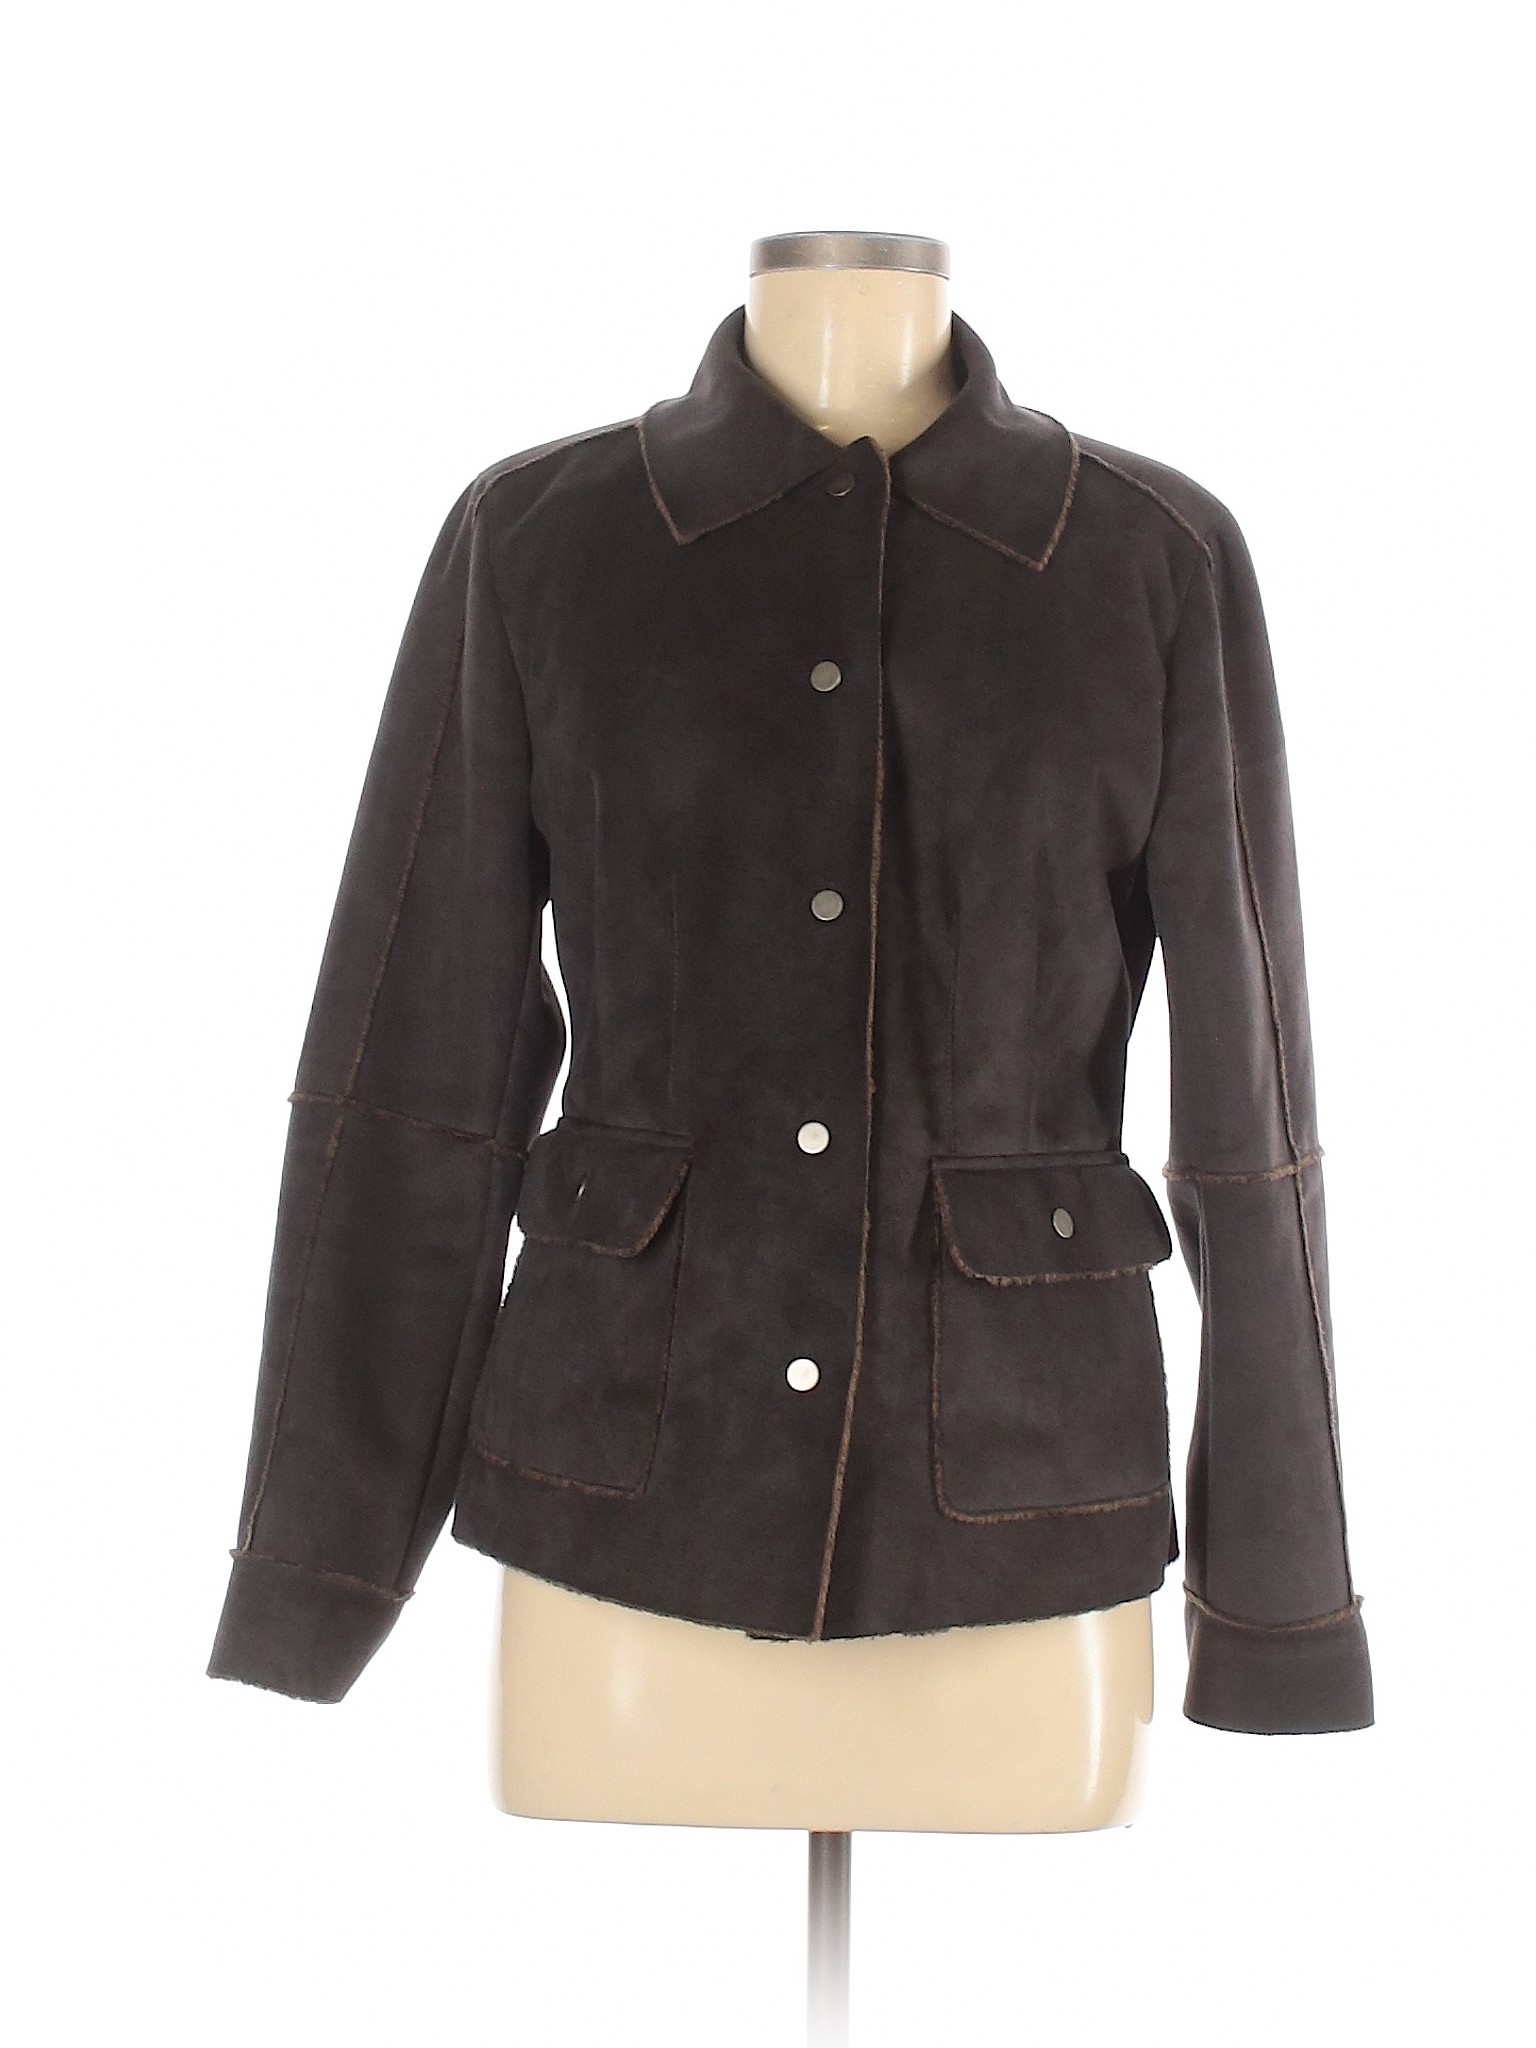 CAbi Women Brown Jacket M | eBay